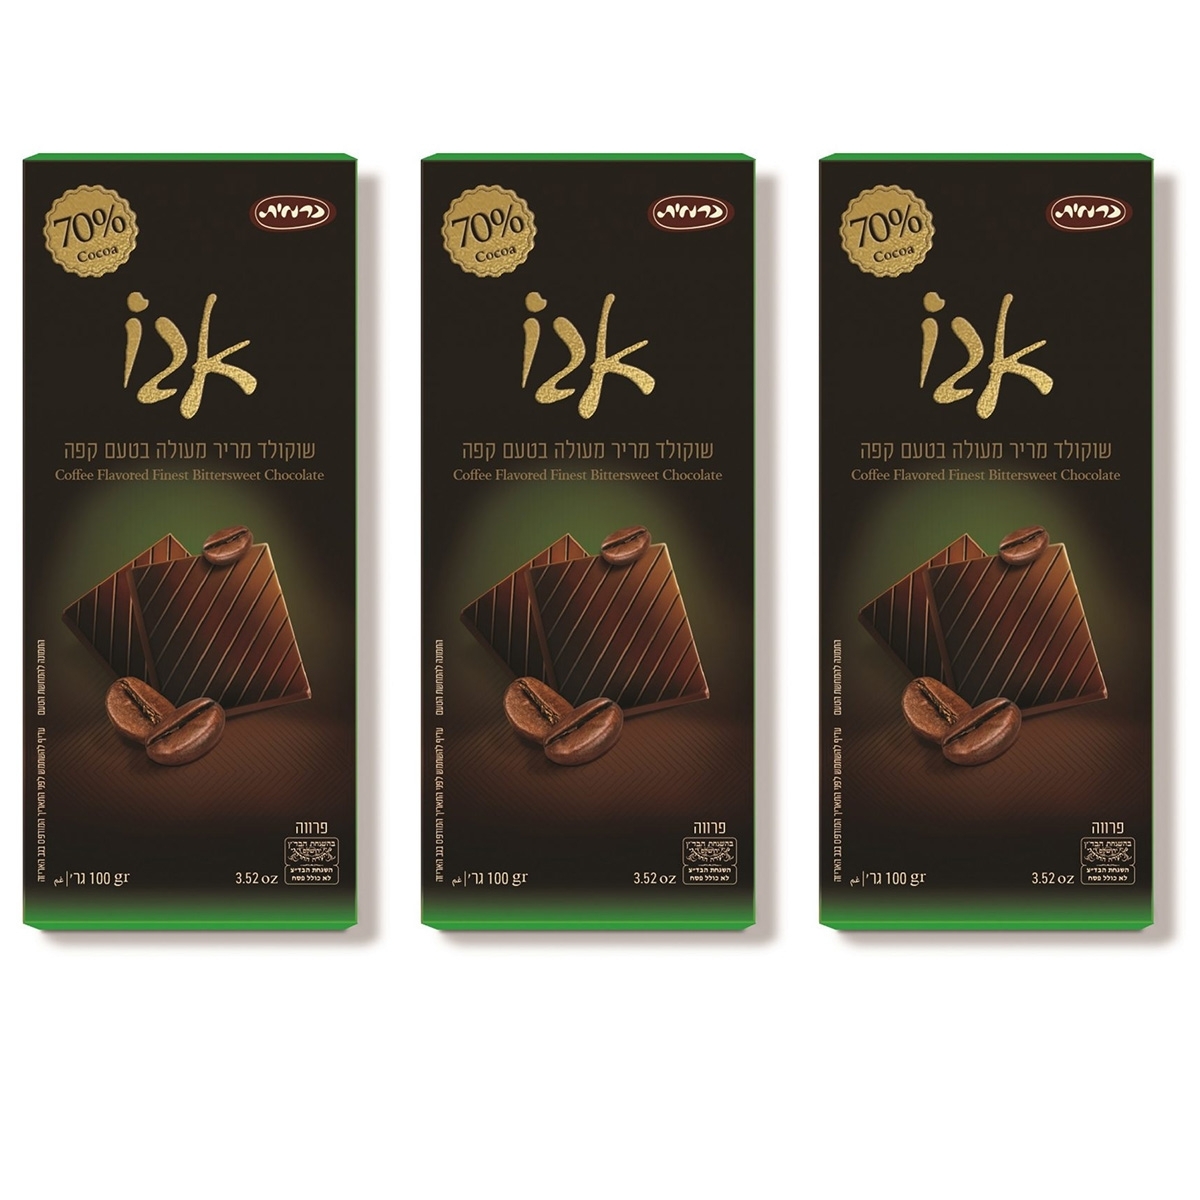 3-Pack of Premium 70% Cocoa Coffee-Flavored Dark Chocolate Bars - 1